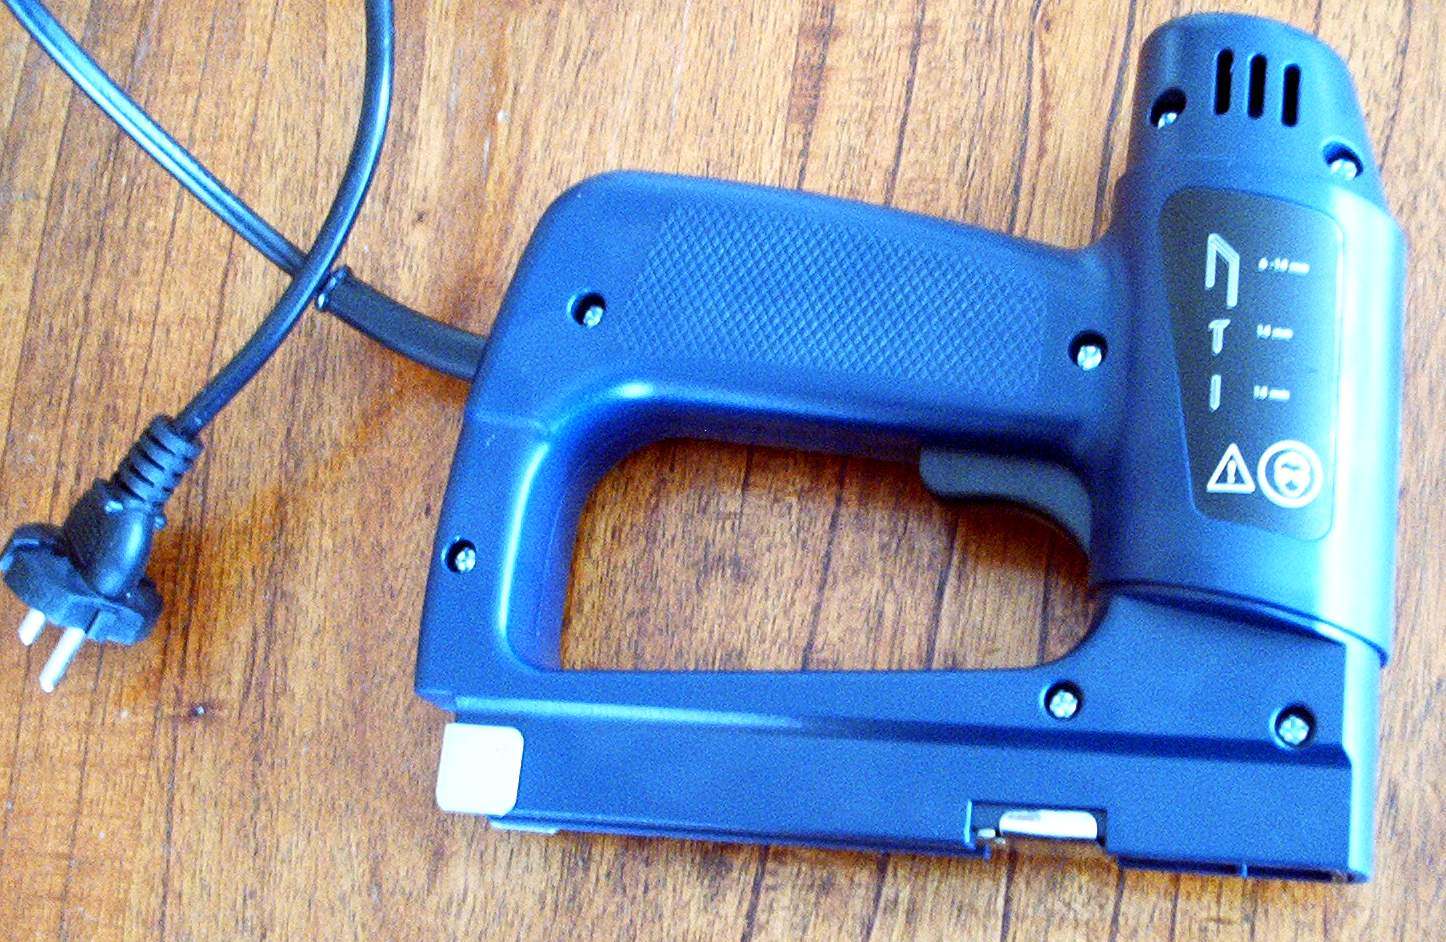 Electric staple gun